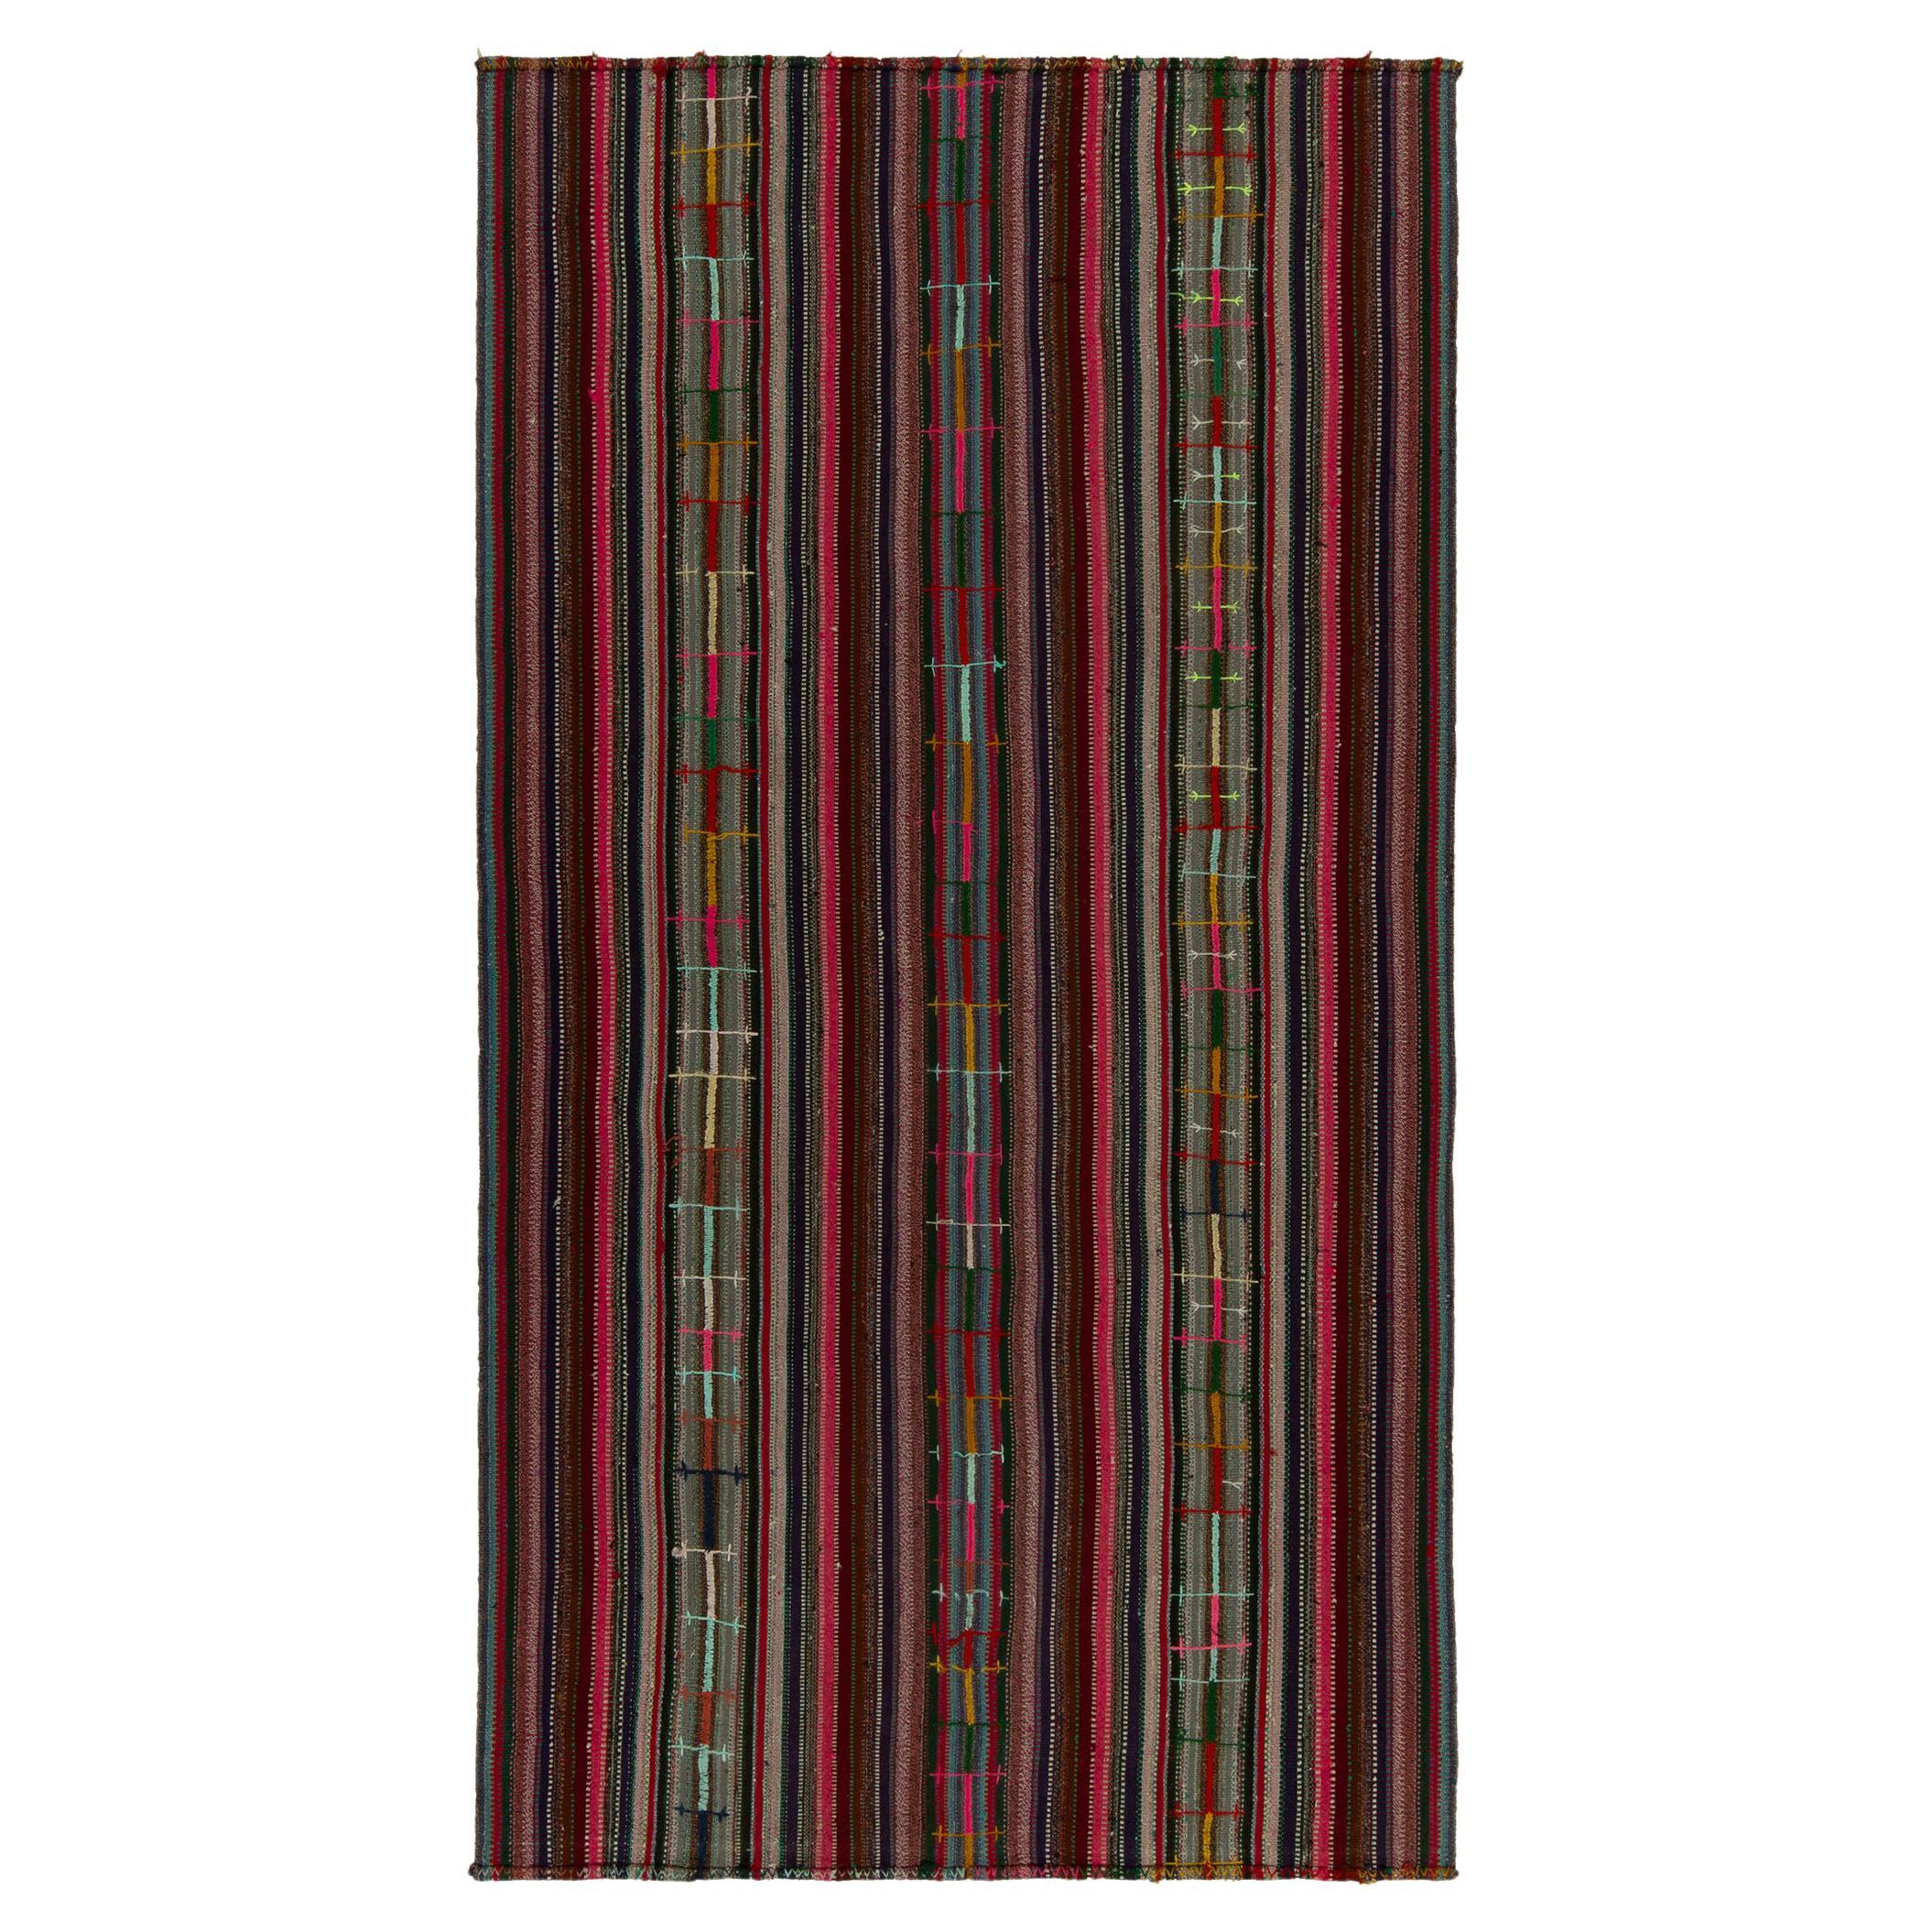 1950s Vintage Chaput Kilim Rug in Multicolor Striped Patterns, by Rug & Kilim For Sale